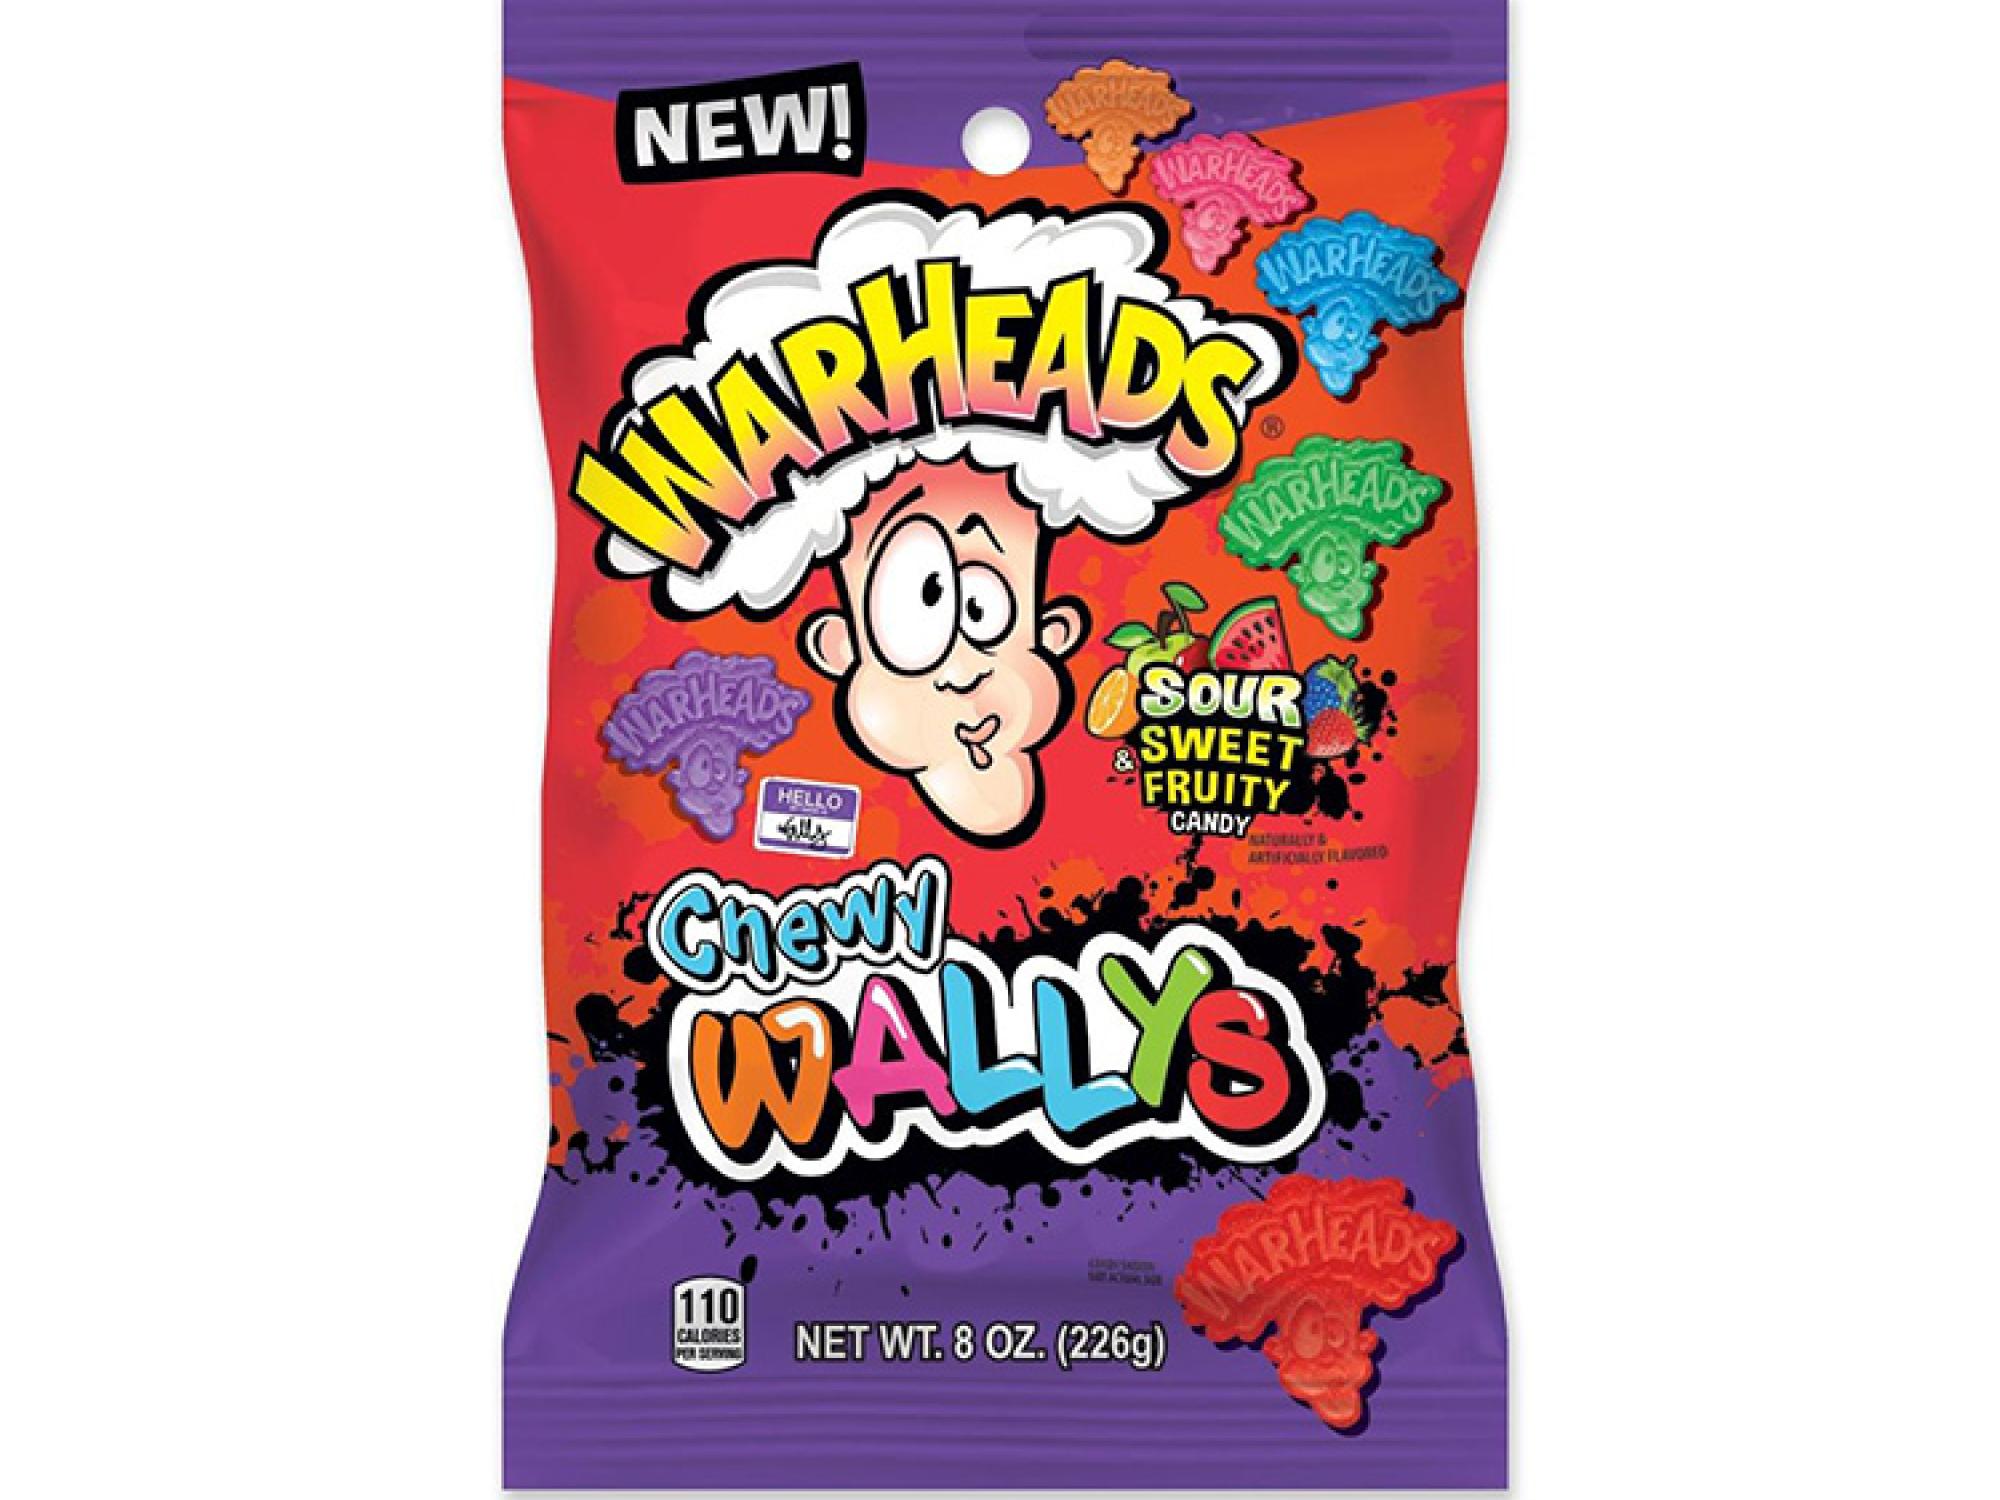 Warheads Chewy Wally